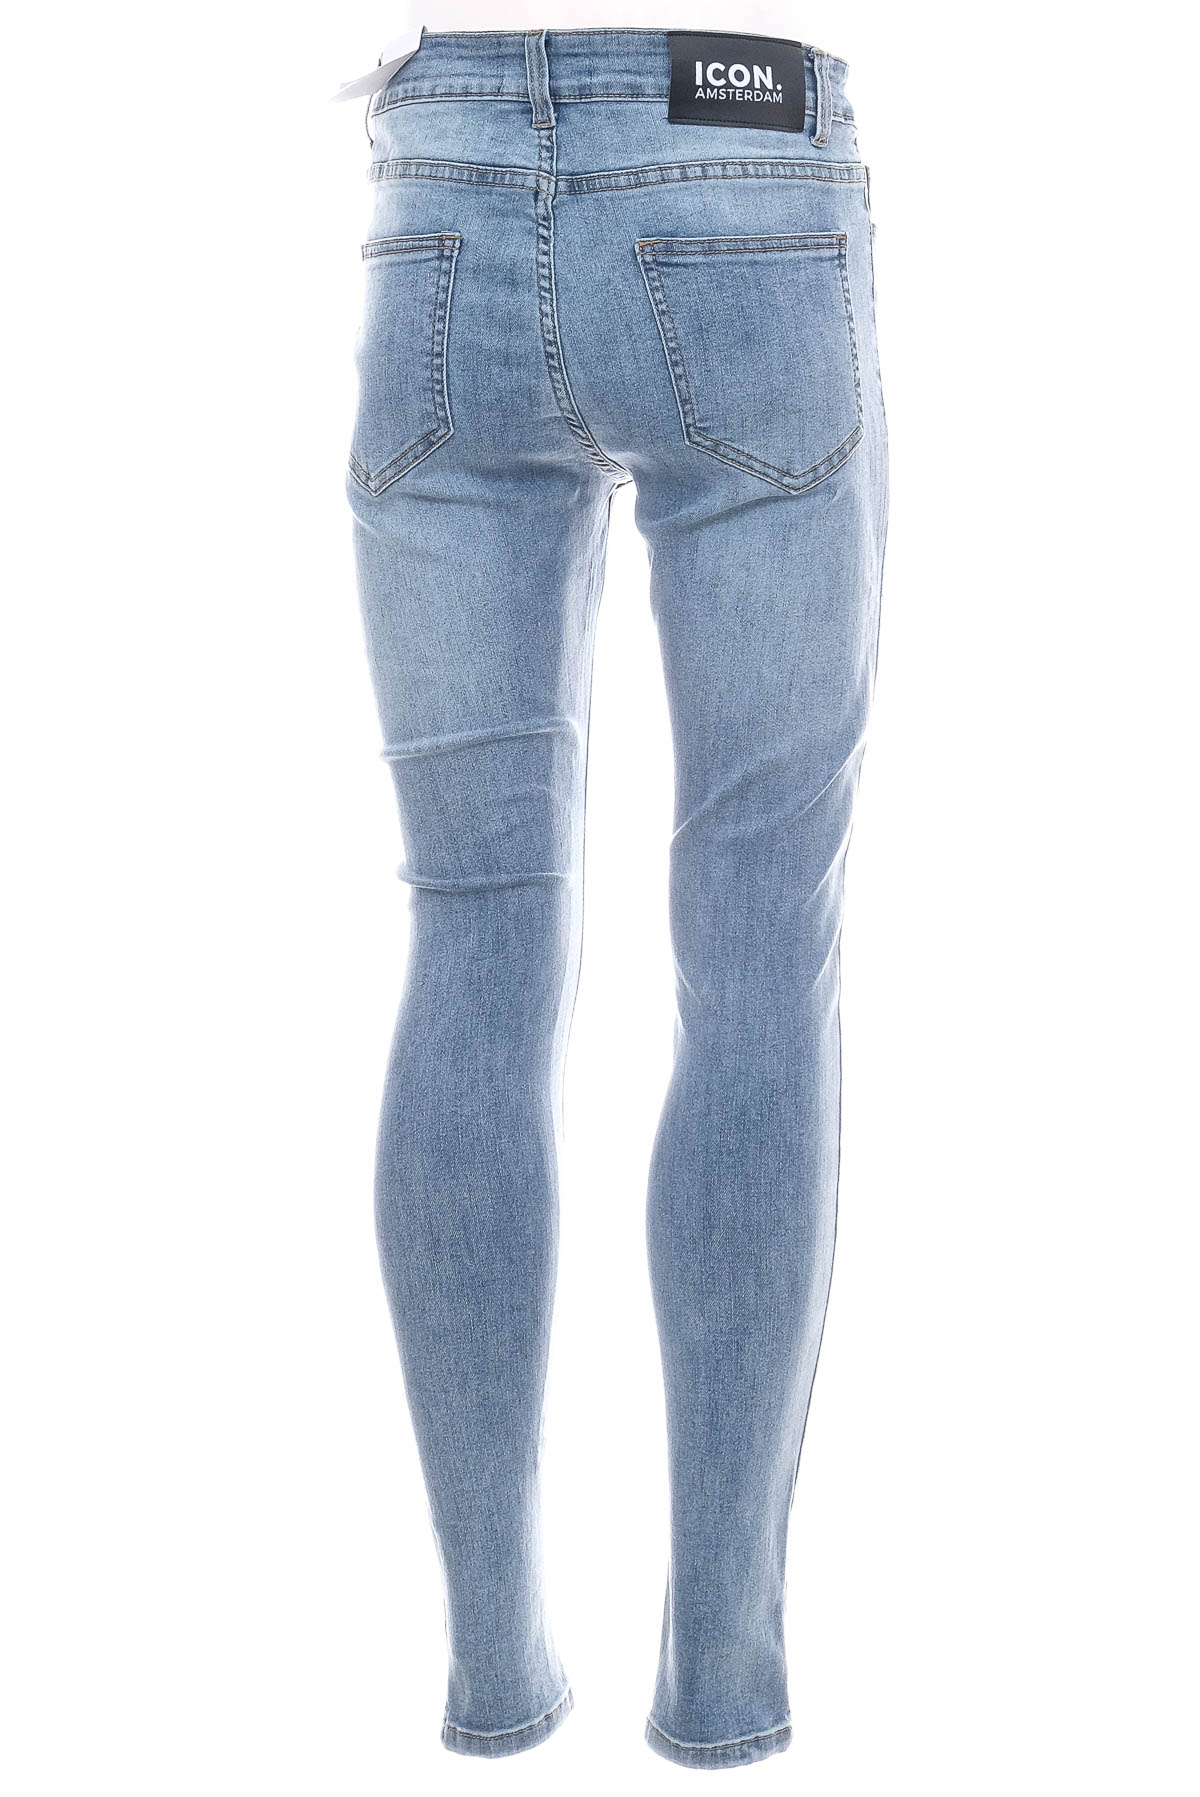 Men's jeans - ICON. AMSTERDAM - 1